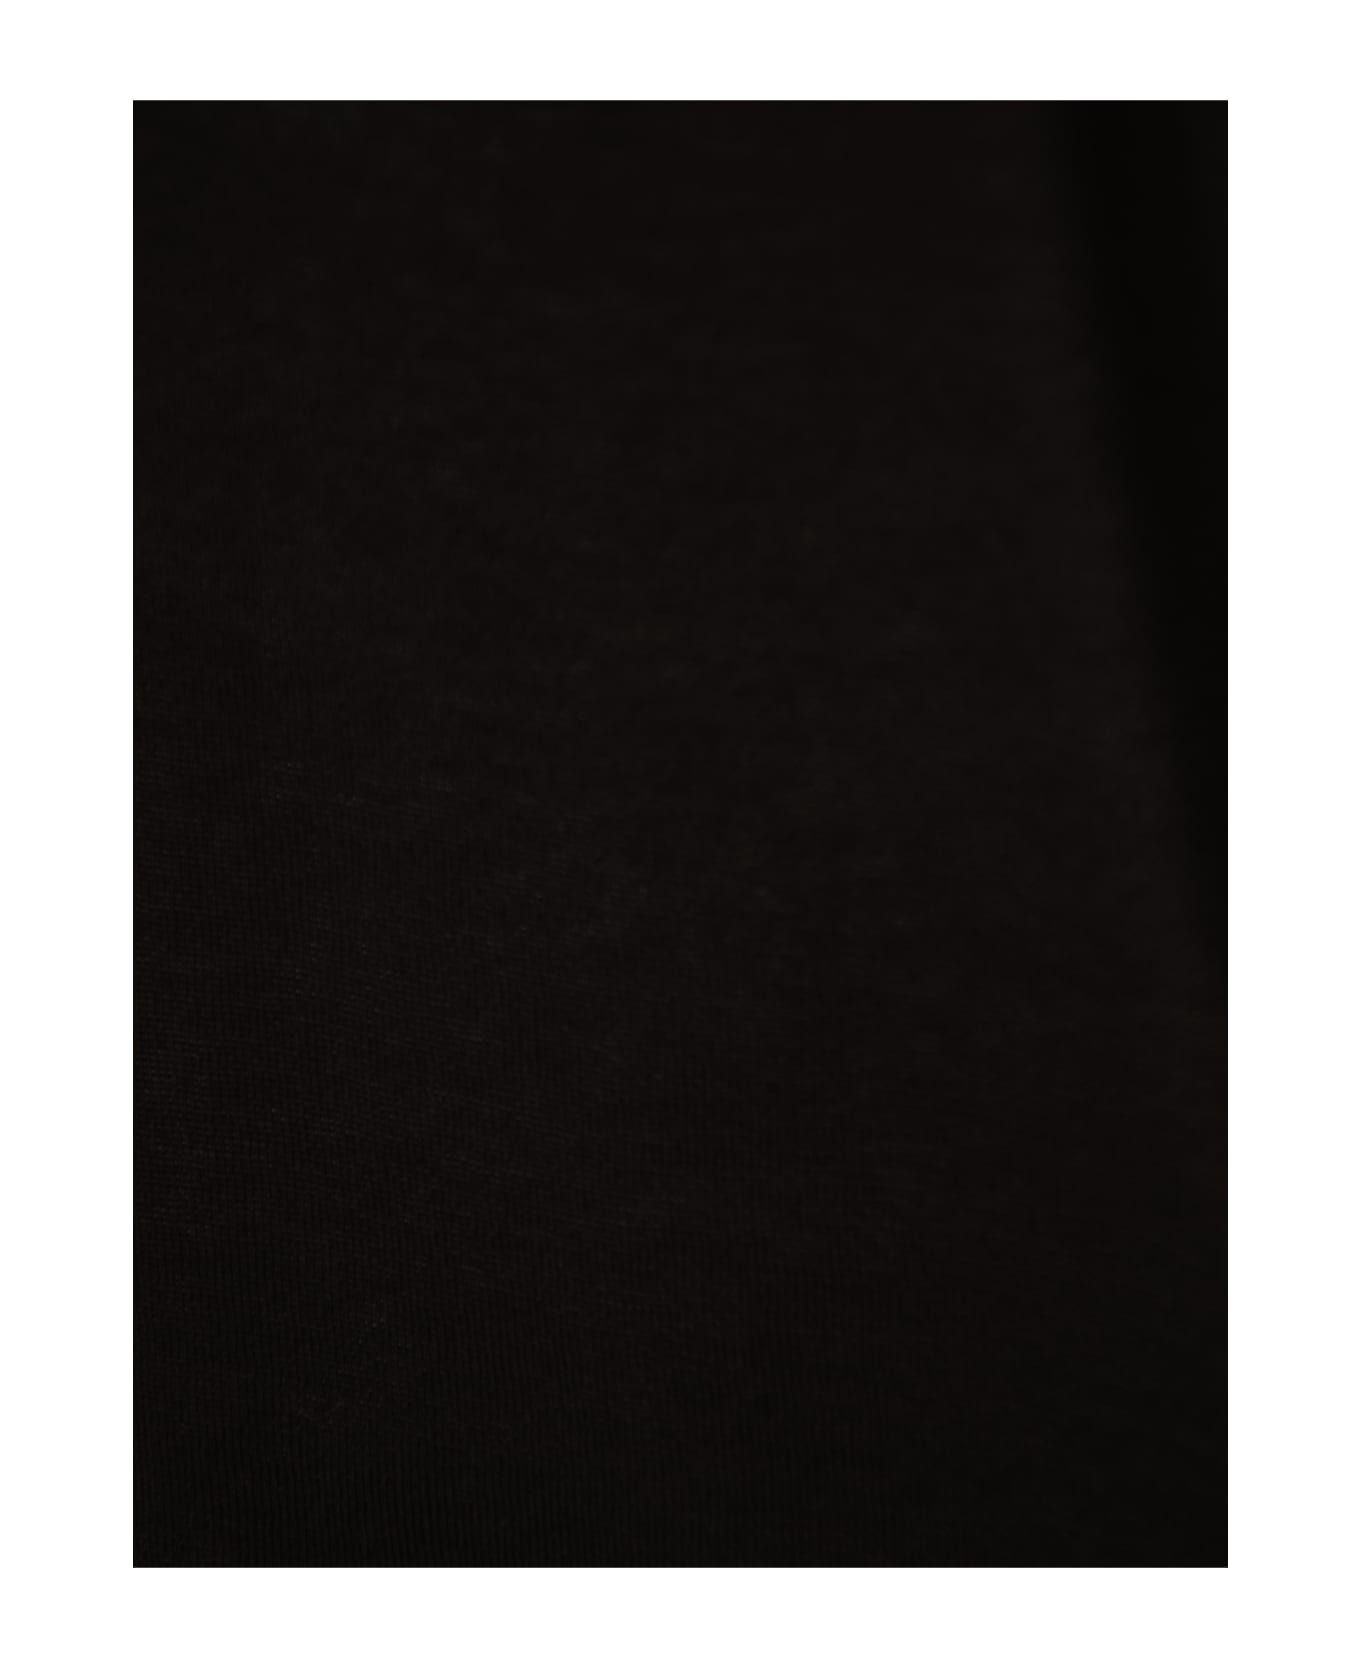 Roberto Collina Round Neck Plain T-shirt - Black